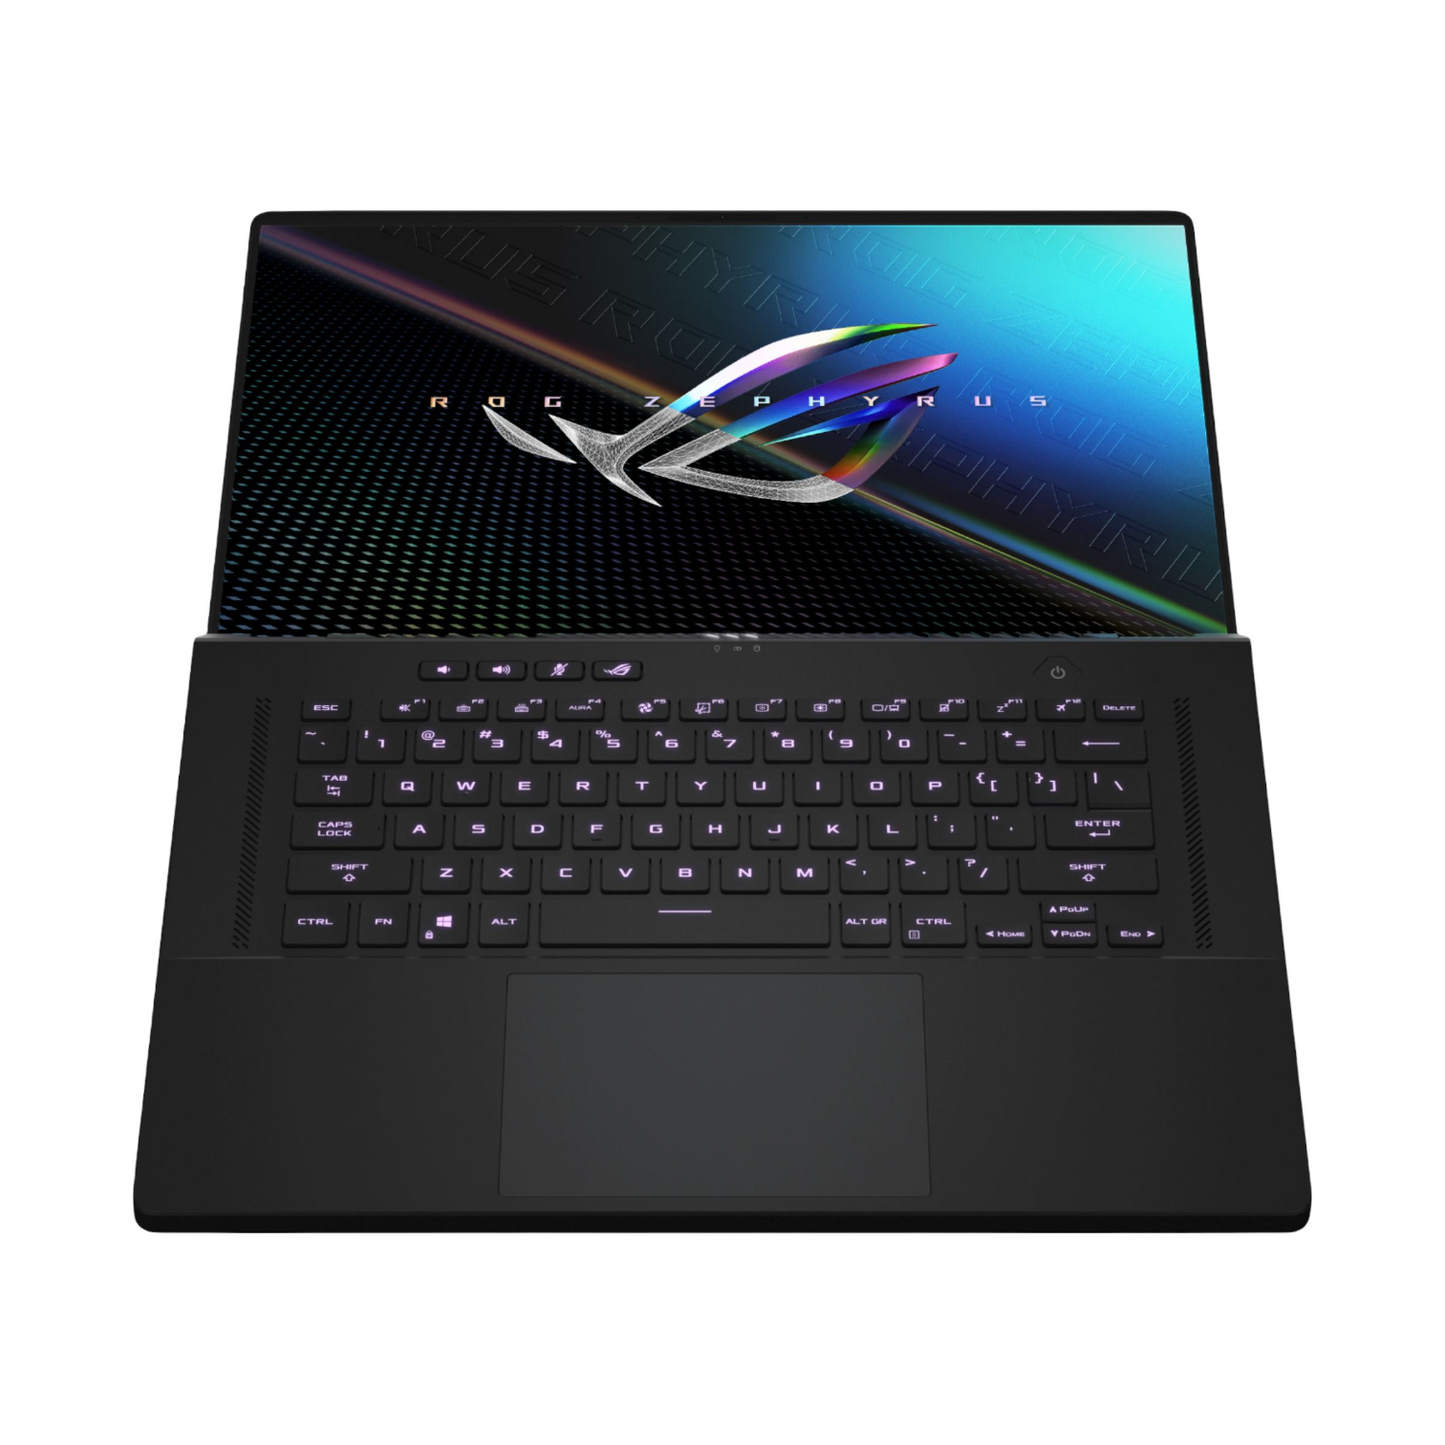 ASUS - ROG Zephyrus M16 GU603 Gaming Laptop - Intel Core i9 - 16GB Memory - NVIDIA RTX3060 - 1TB SSD - Off Black